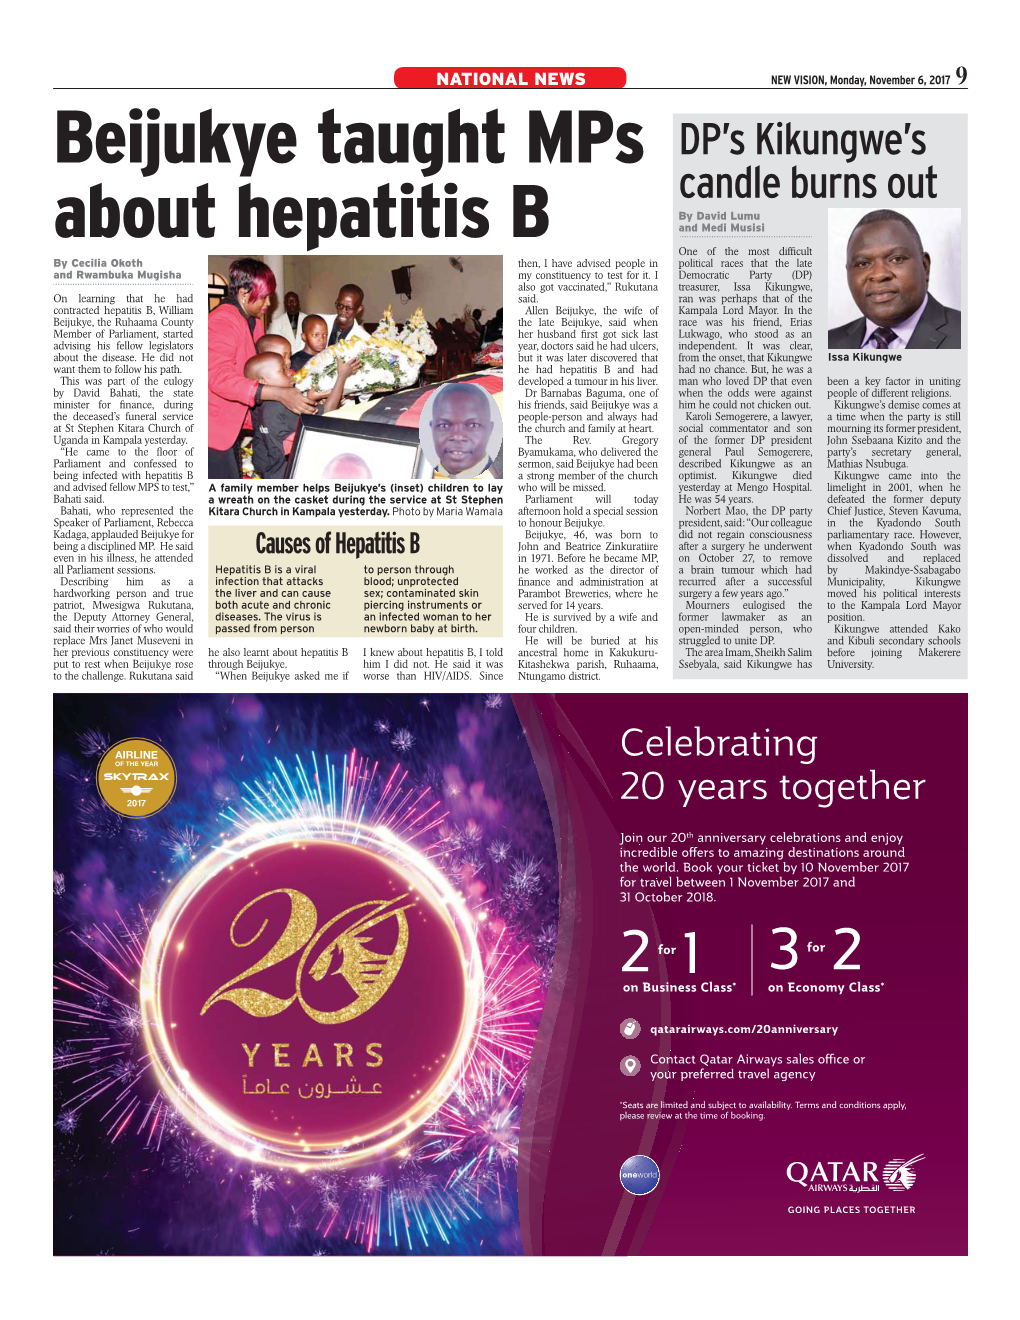 Beijukye Taught Mps About Hepatitis B